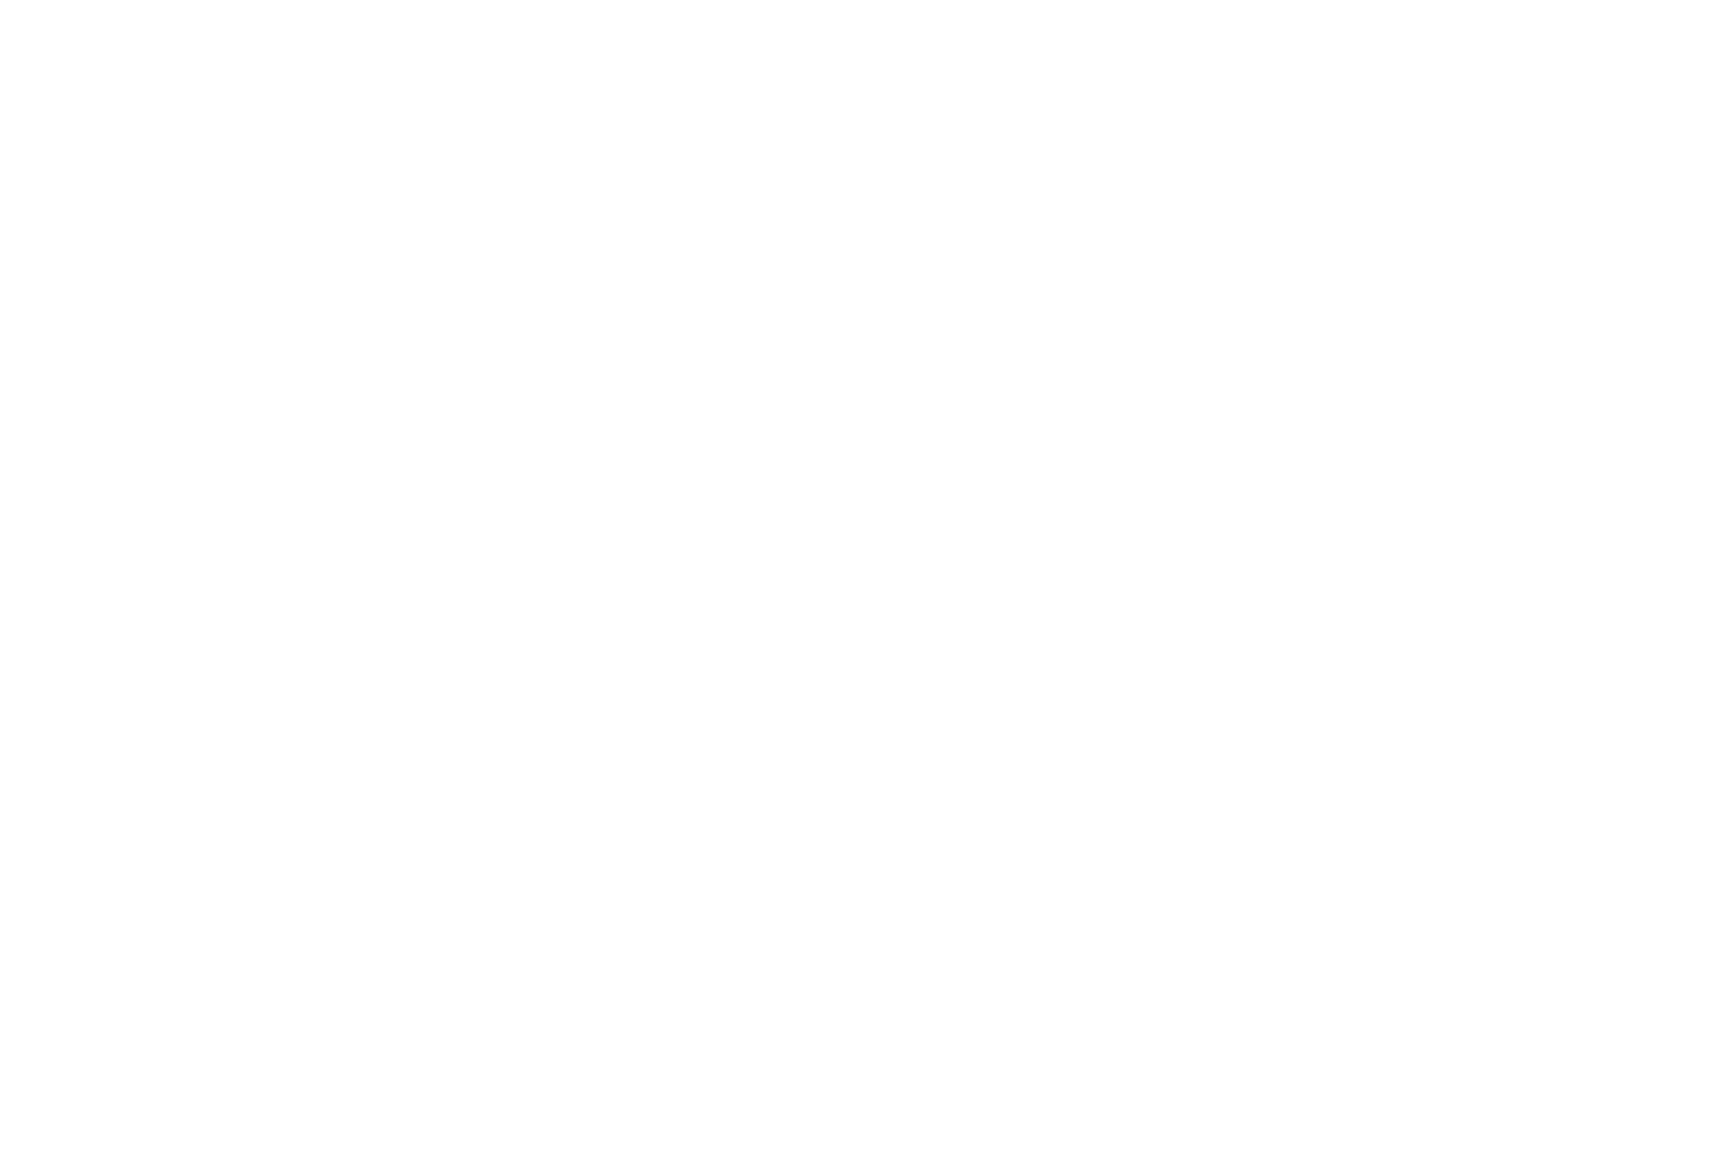 Best Director - Nieves International Christian Film Festival - 2022